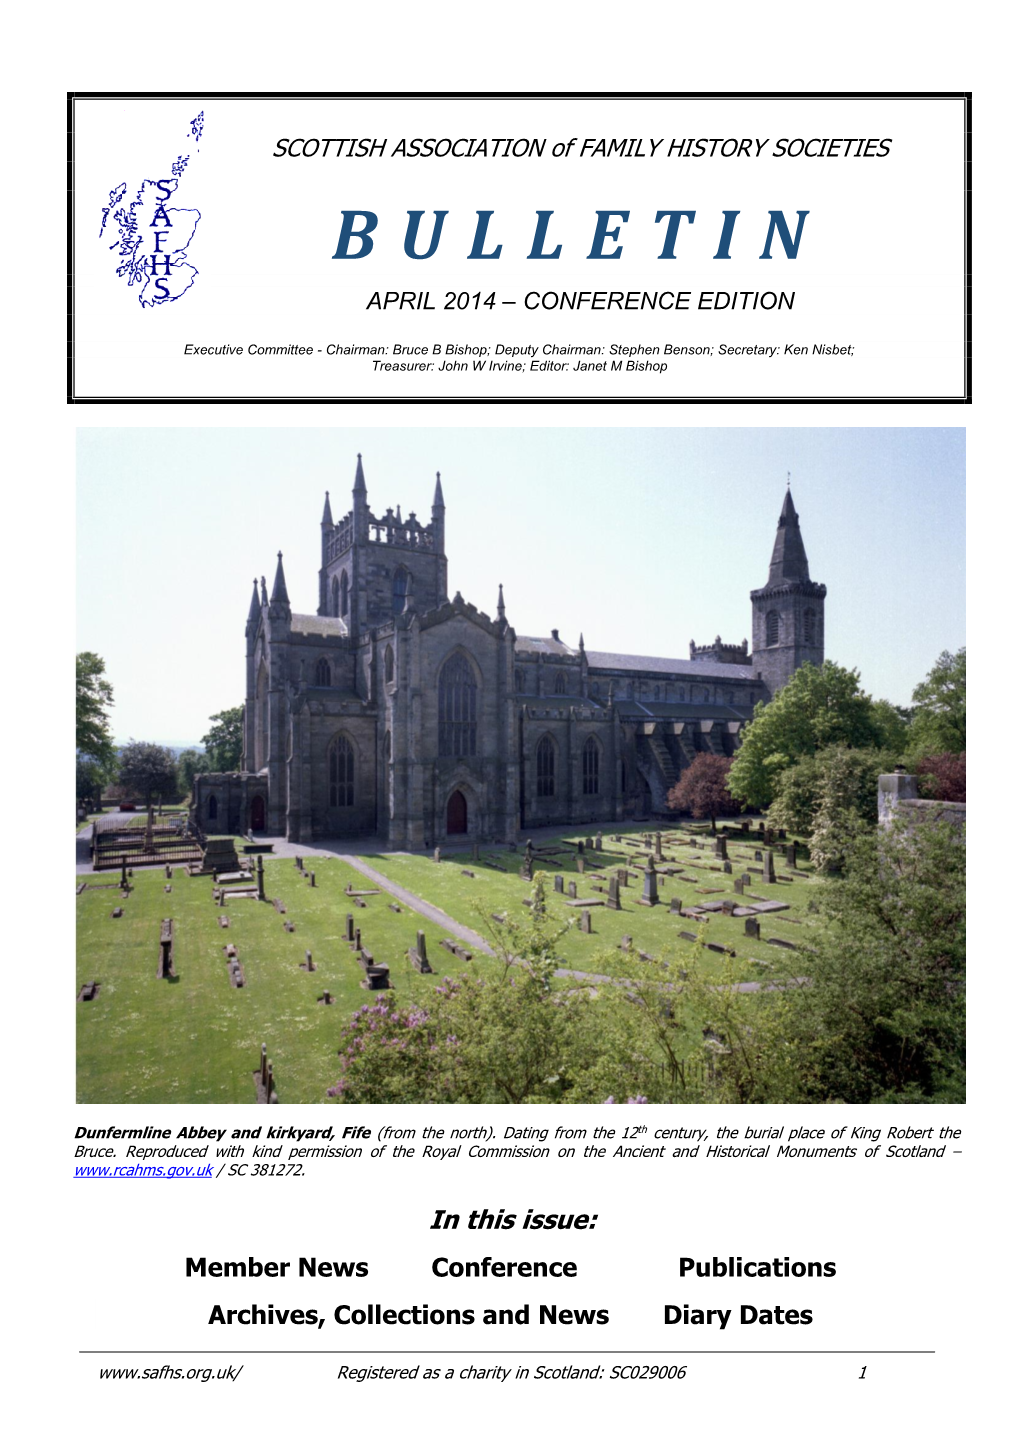 SAFHS Bulletin: April 2014